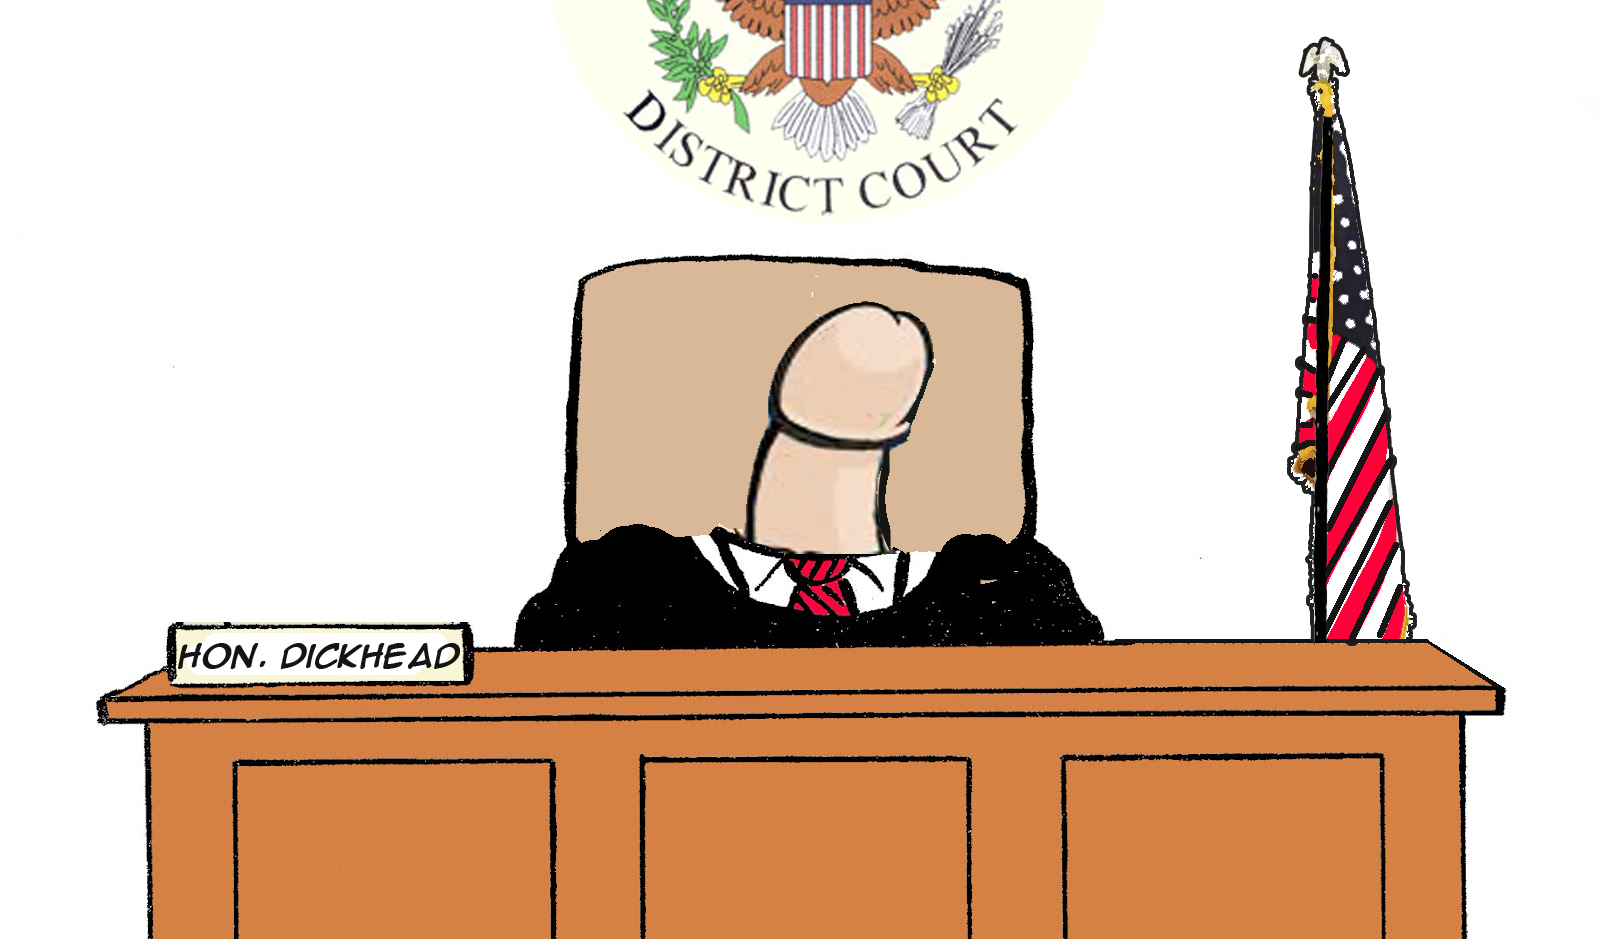 Judge Dickhead